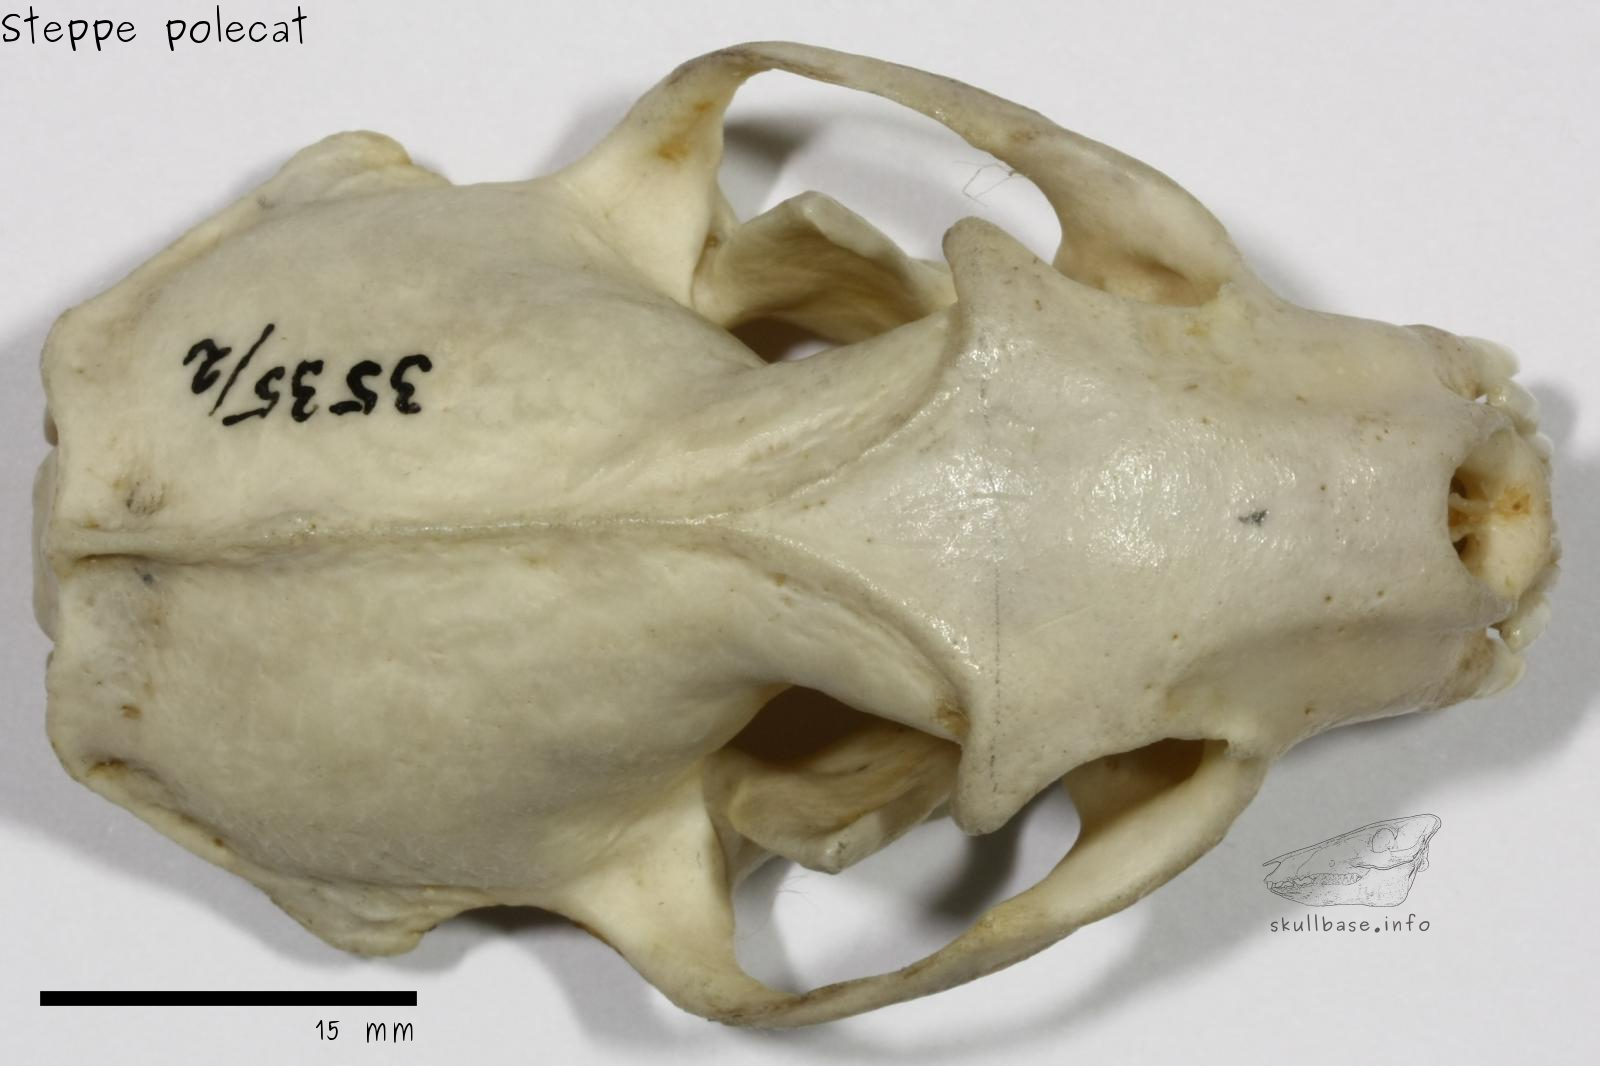 Steppe polecat (Mustela eversmanii) skull dorsal view